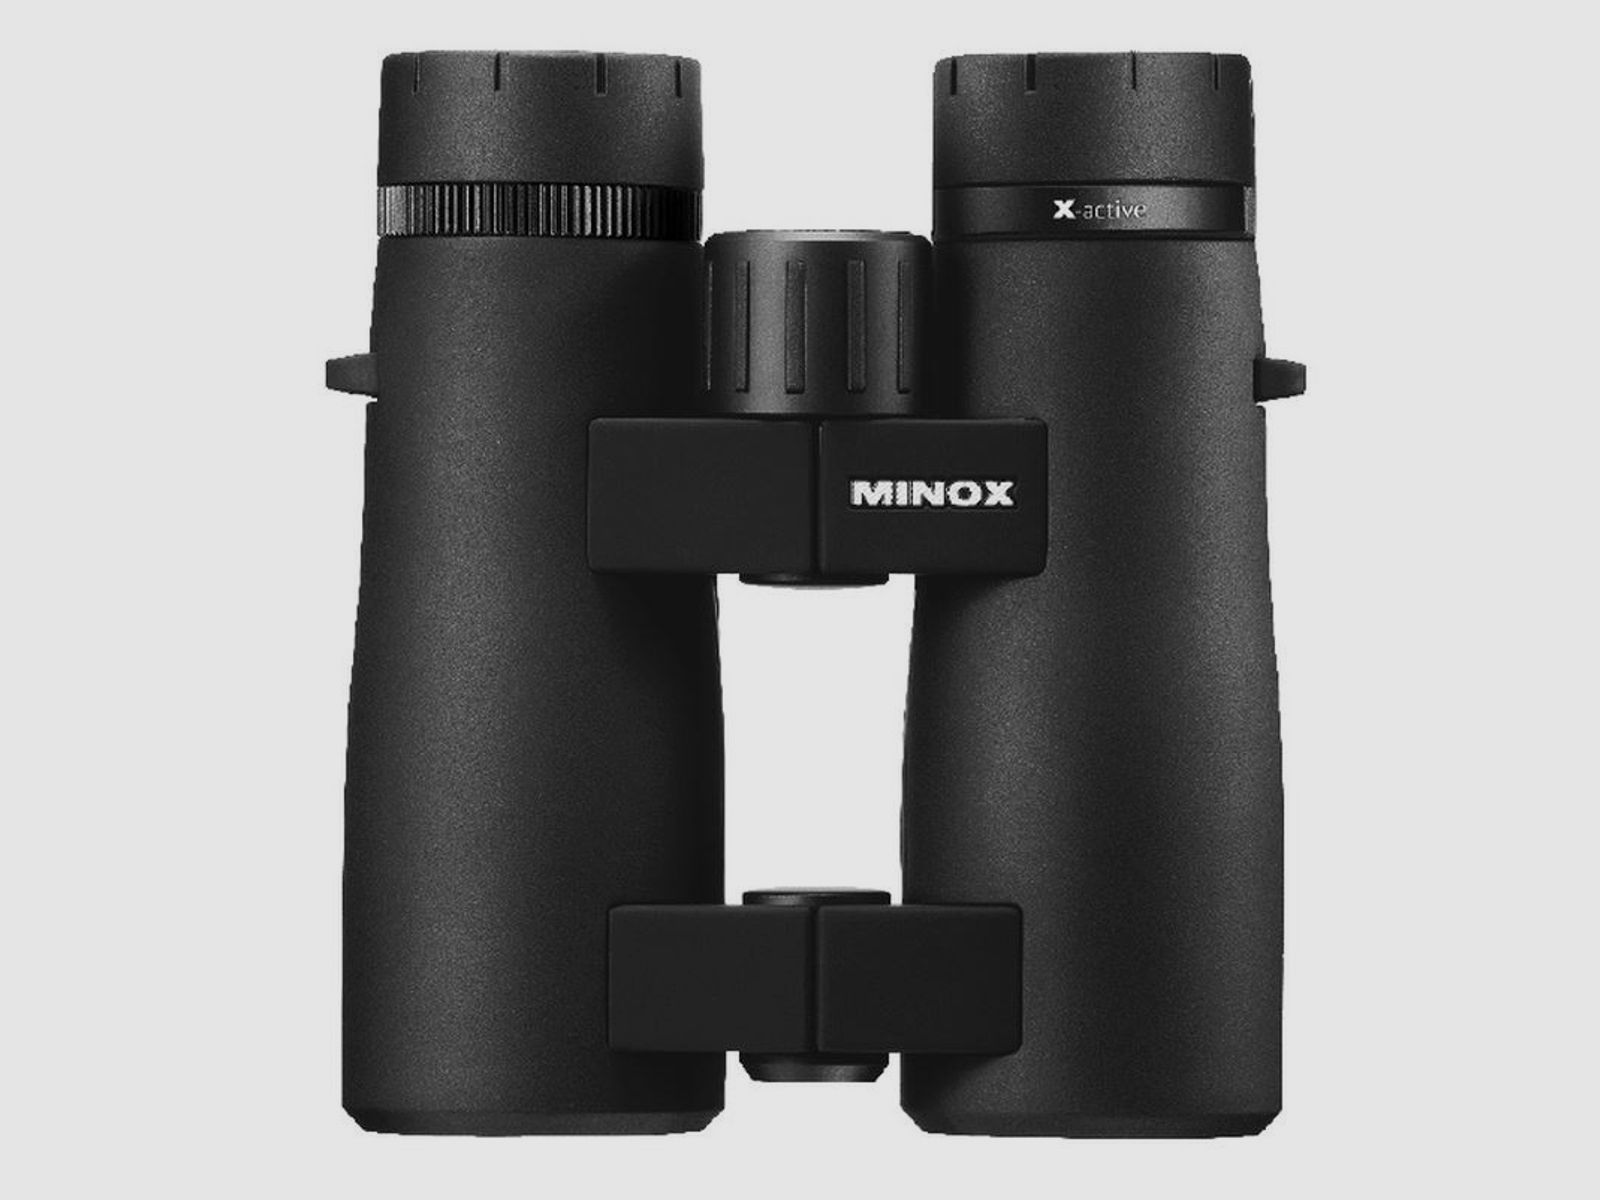 Minox Minox X-active 10x44 -24,90€ 10% Fernglas Rabatt 224,10 Effektivpreis